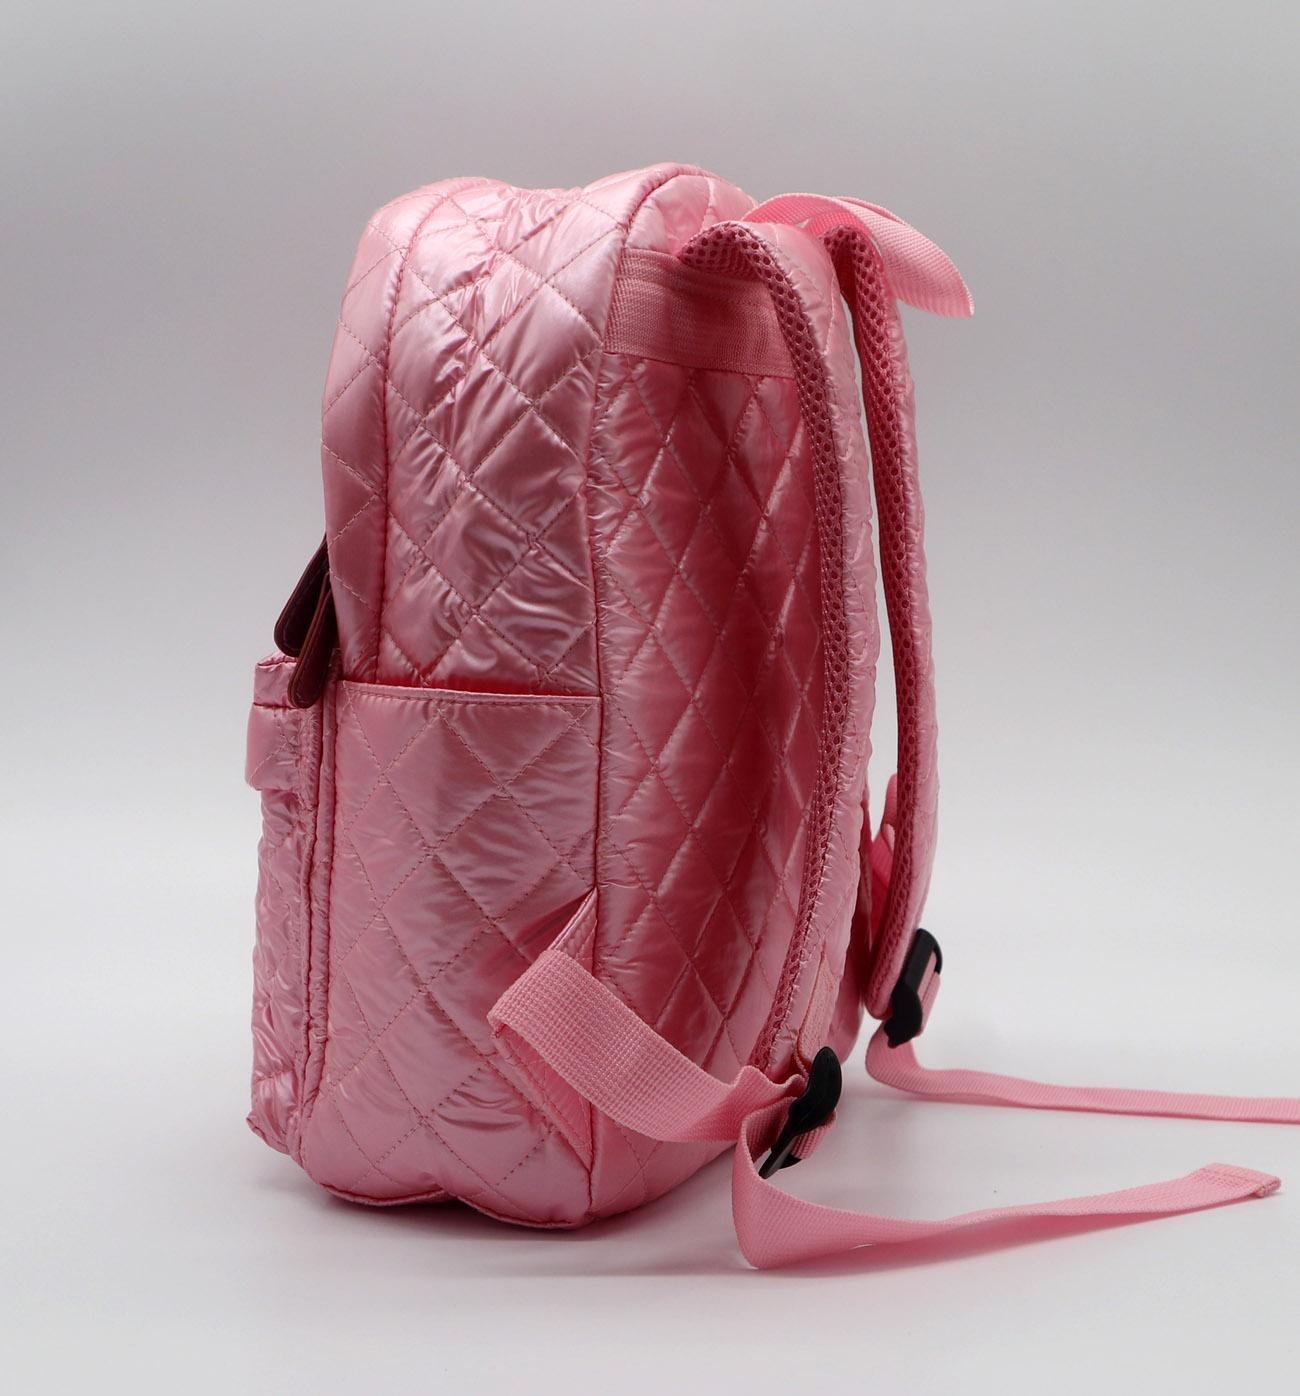 Nylon quilted lovely kids small pink school bag for kindergarten girls 3